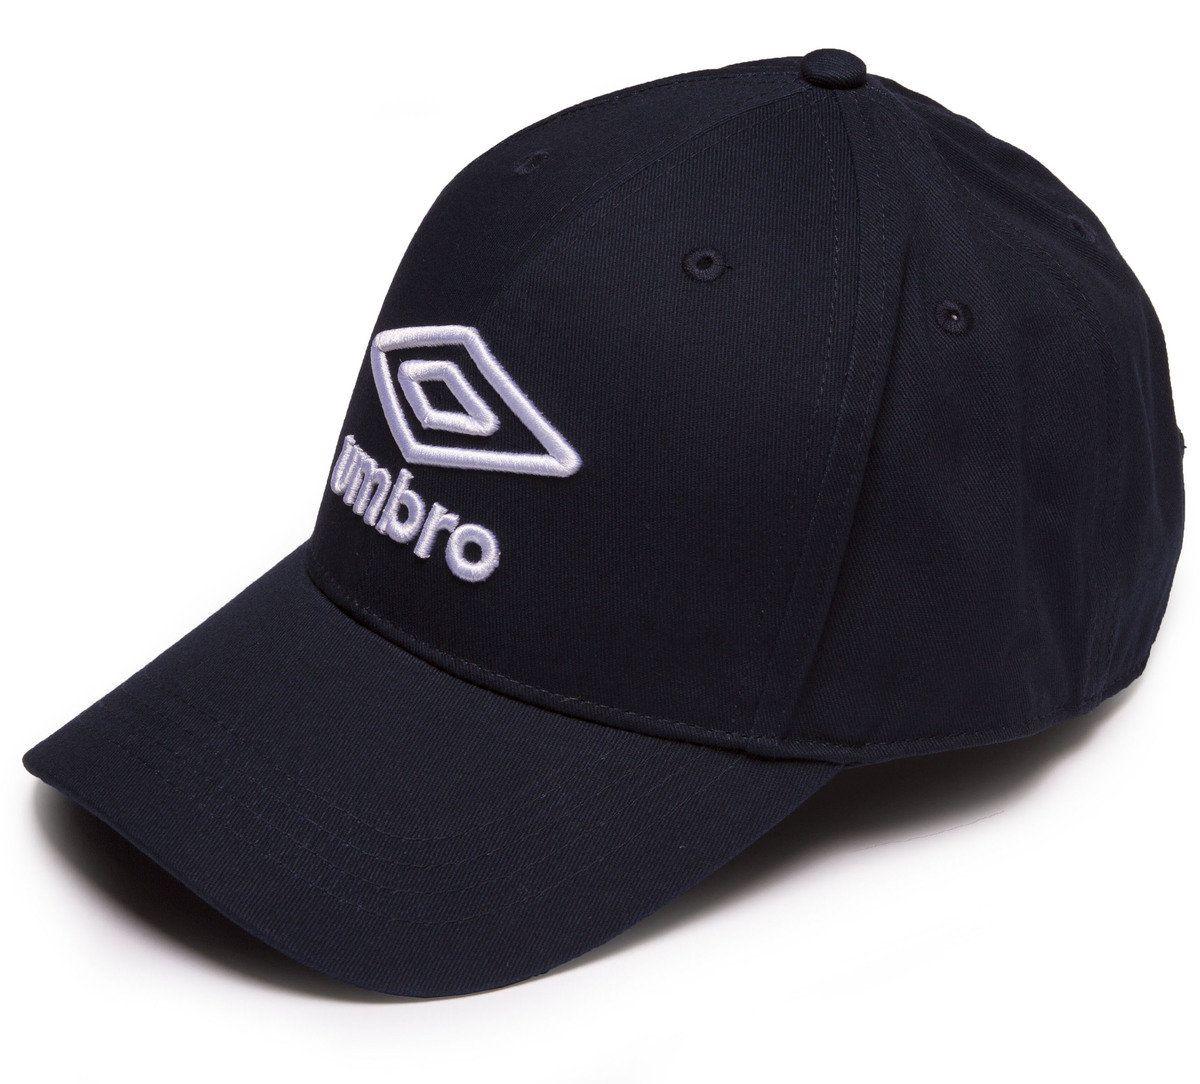 Peru Umbro Logo - LOGO CAP - Hats - Umbro